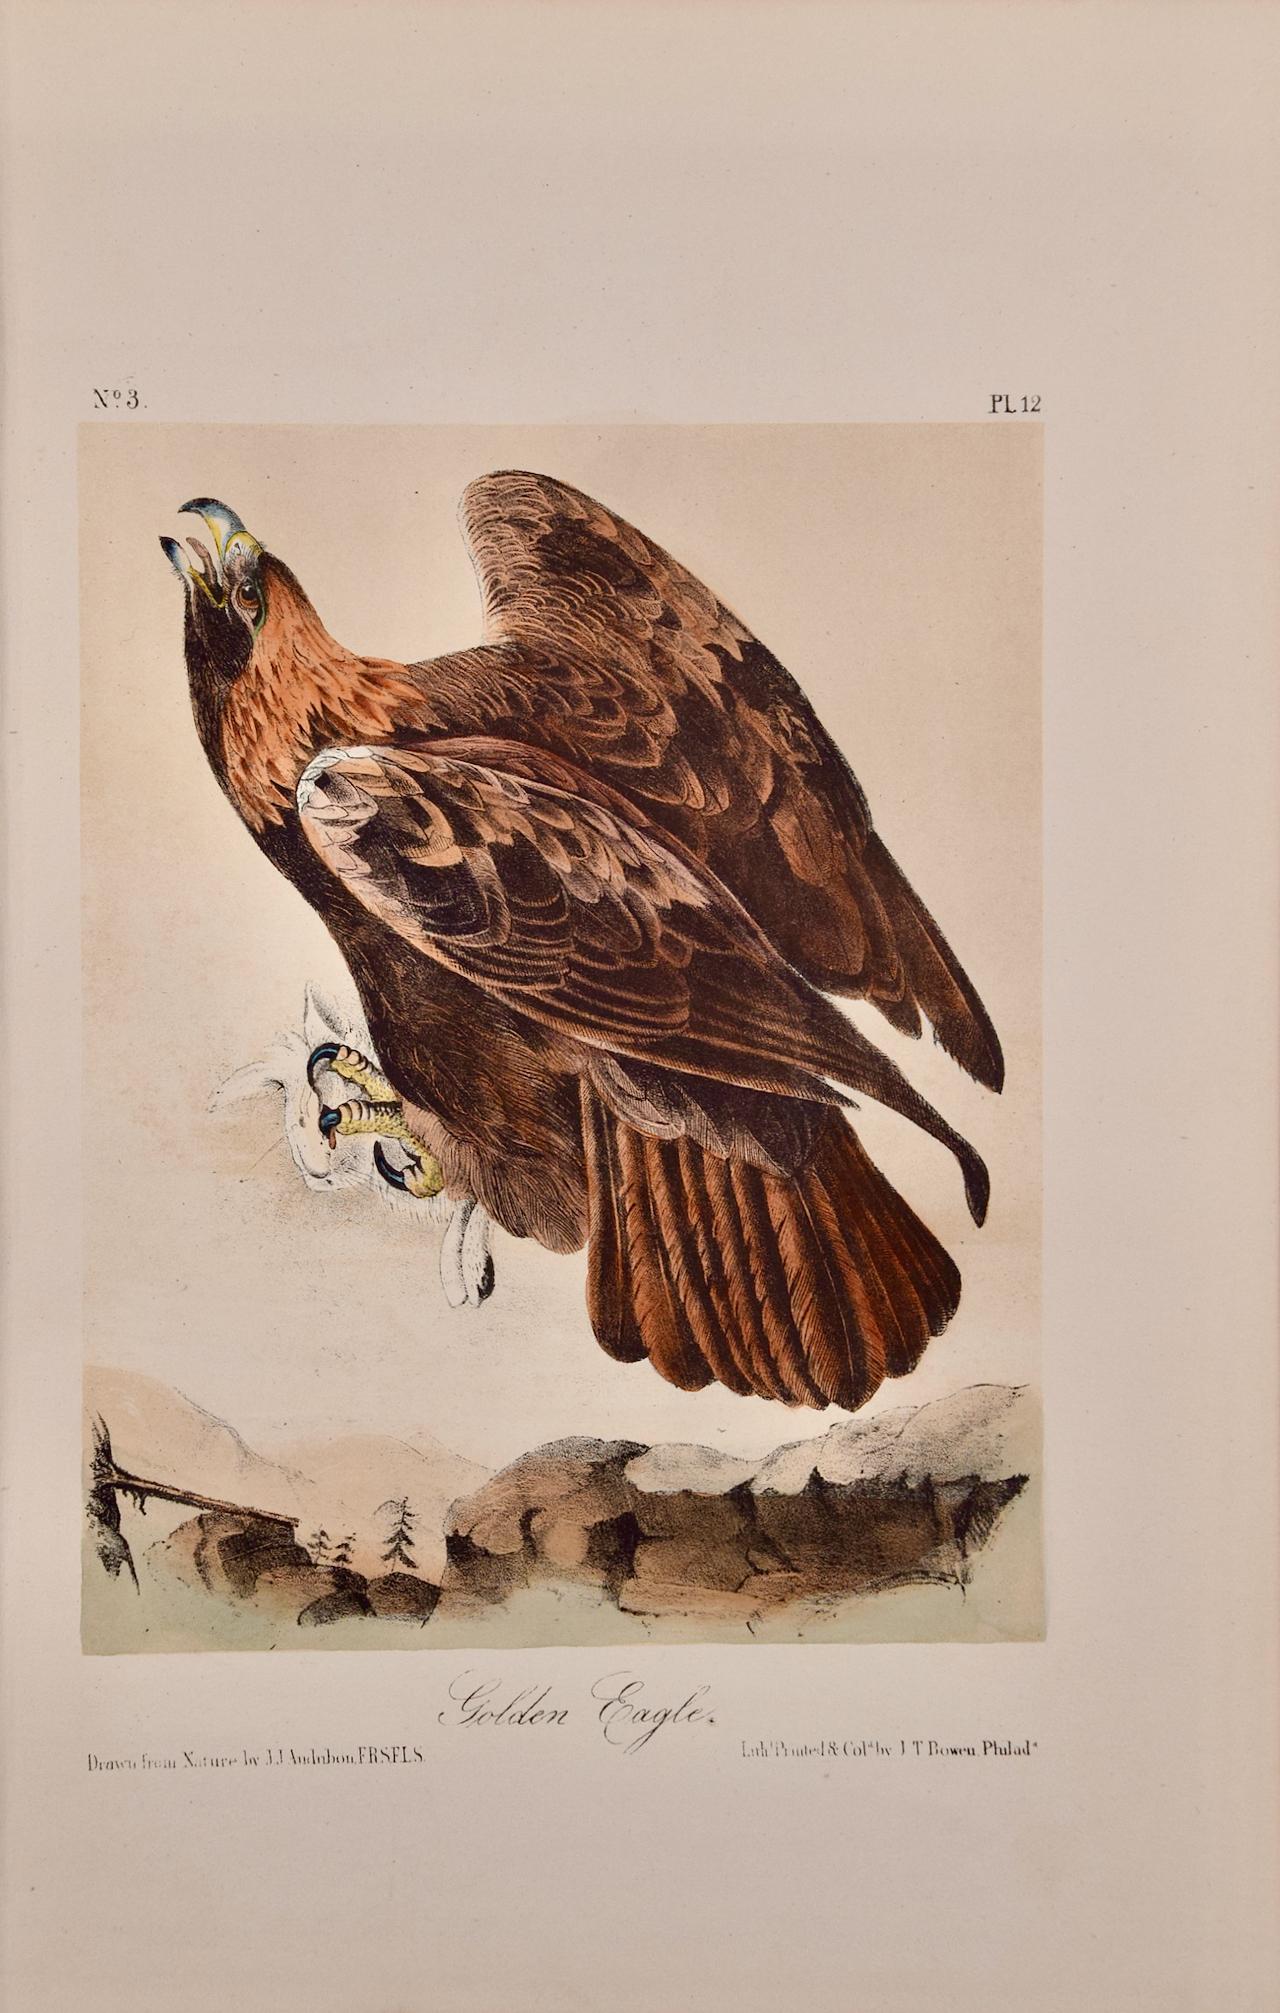 John James Audubon Landscape Print - Golden Eagle: An Original 19th C. Audubon Hand-colored Bird Lithograph